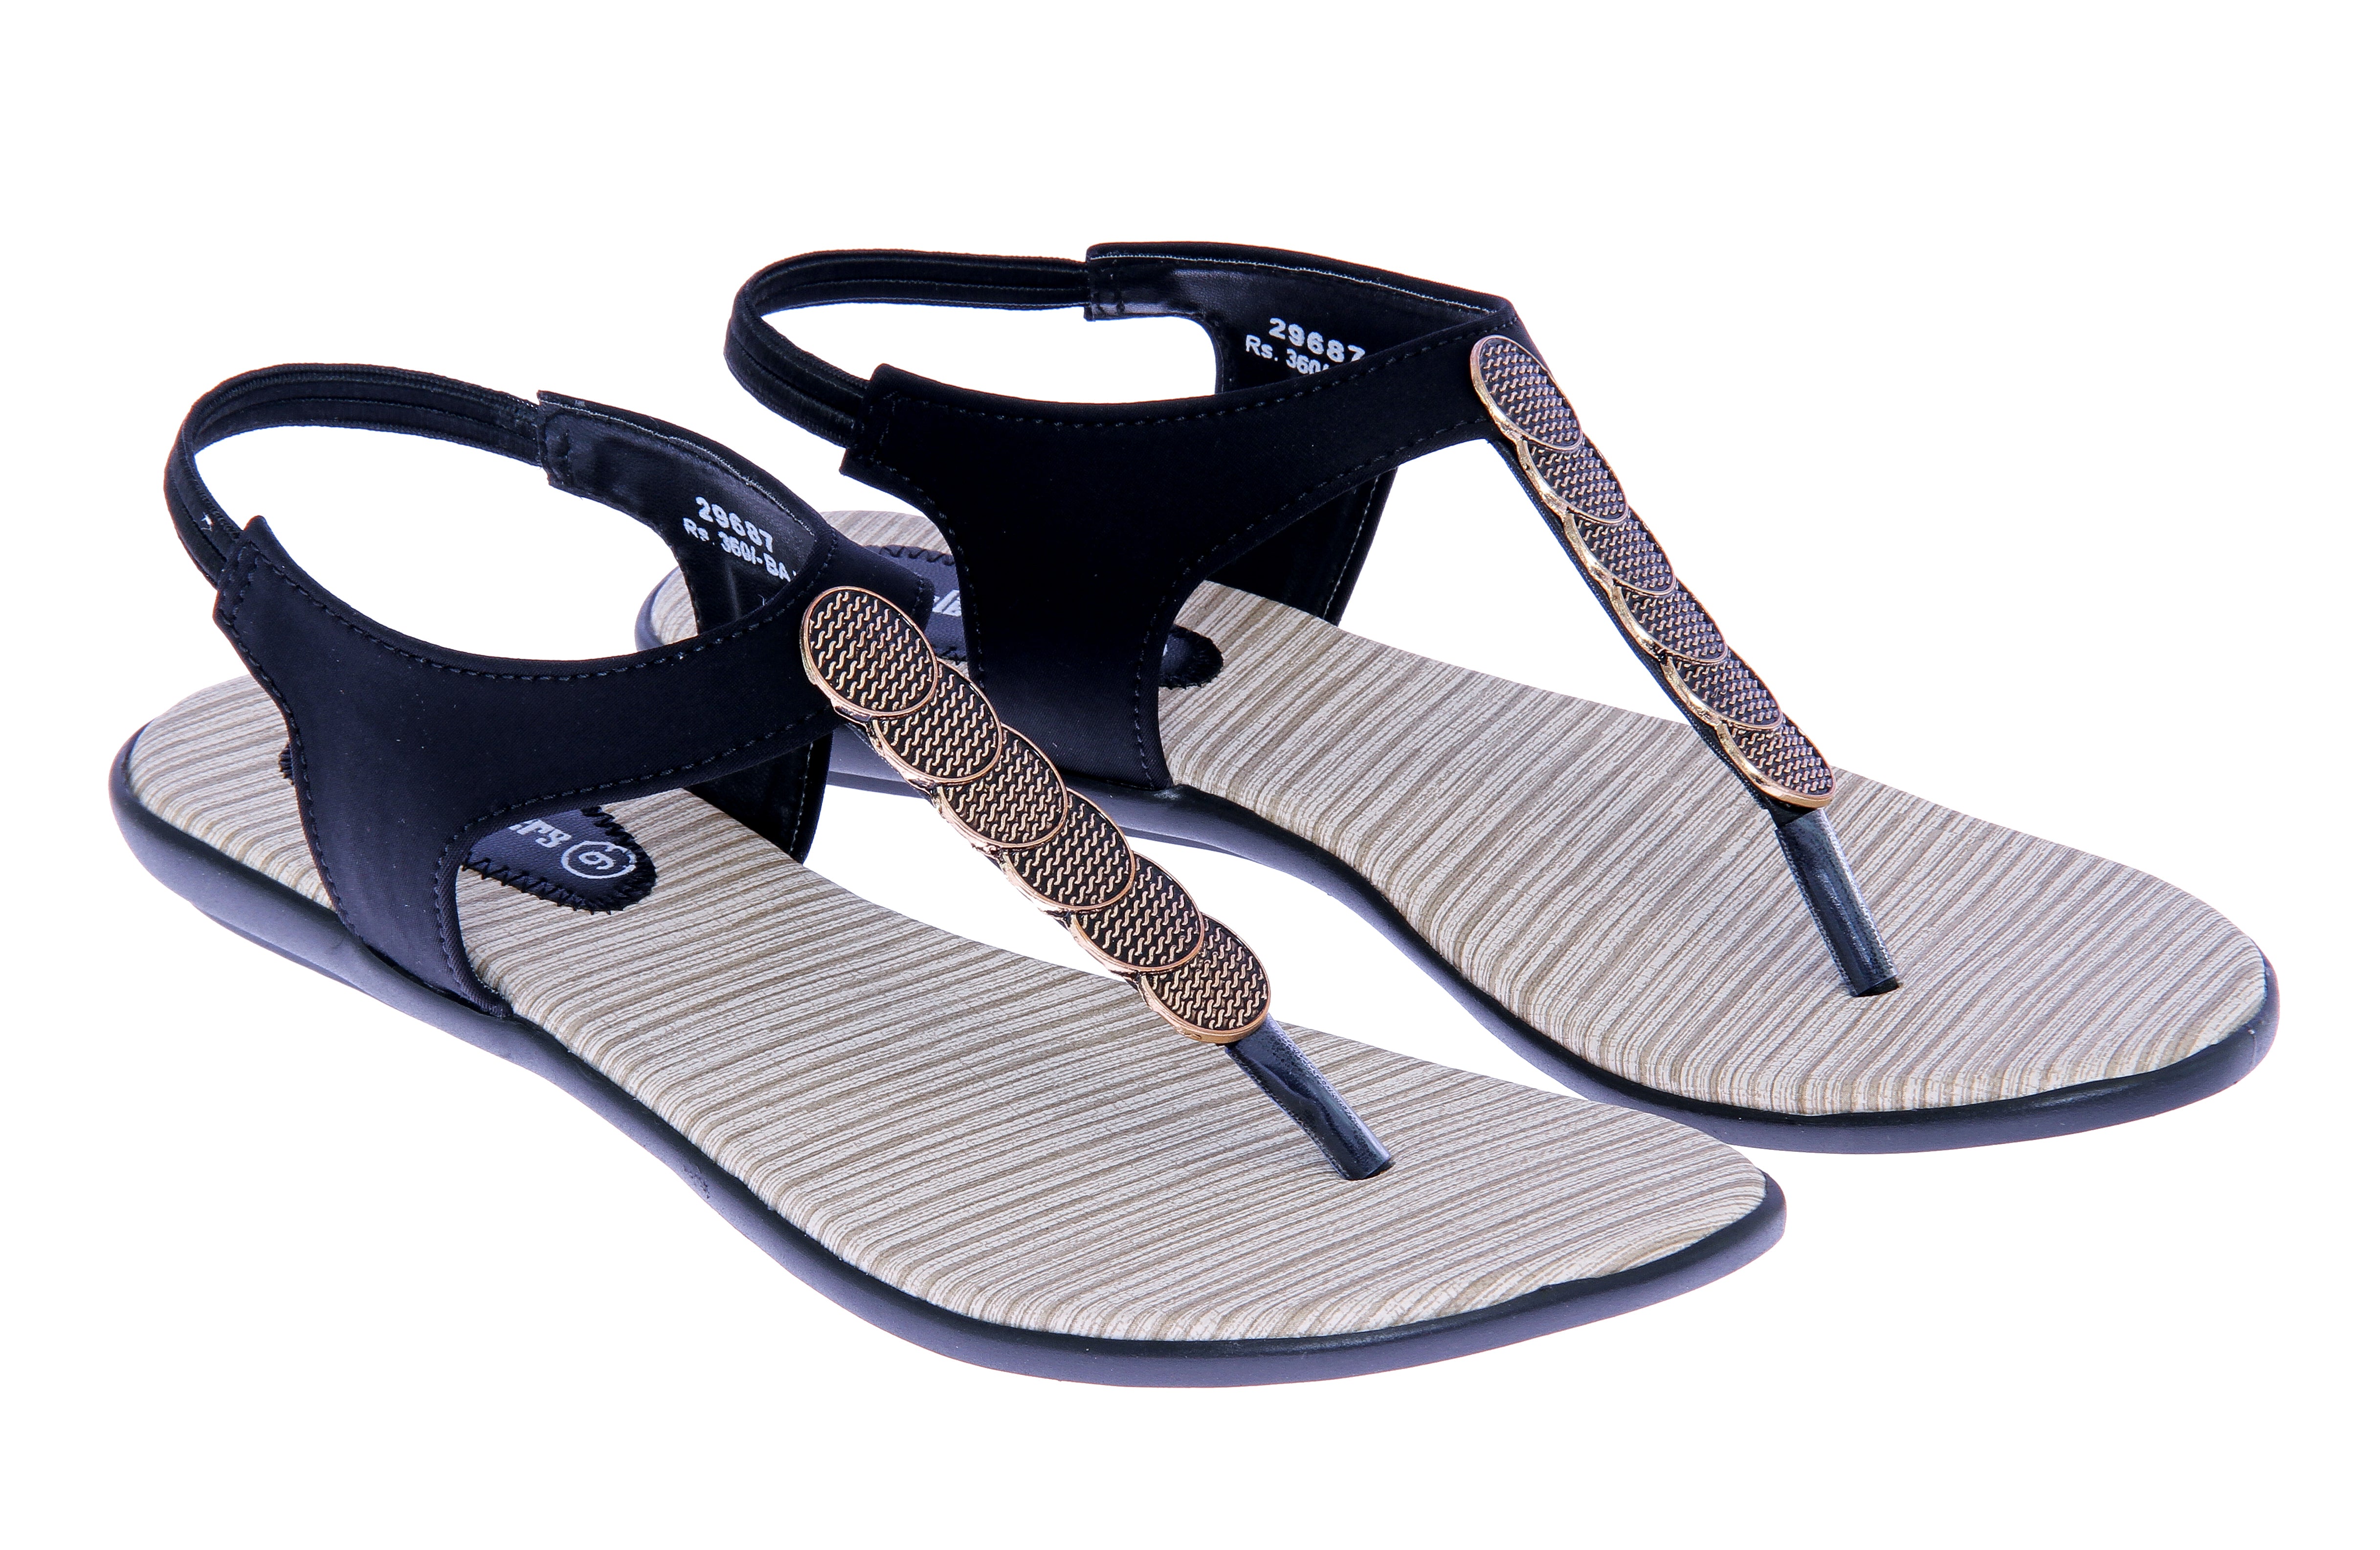 beach style flat sandals women newest| Alibaba.com